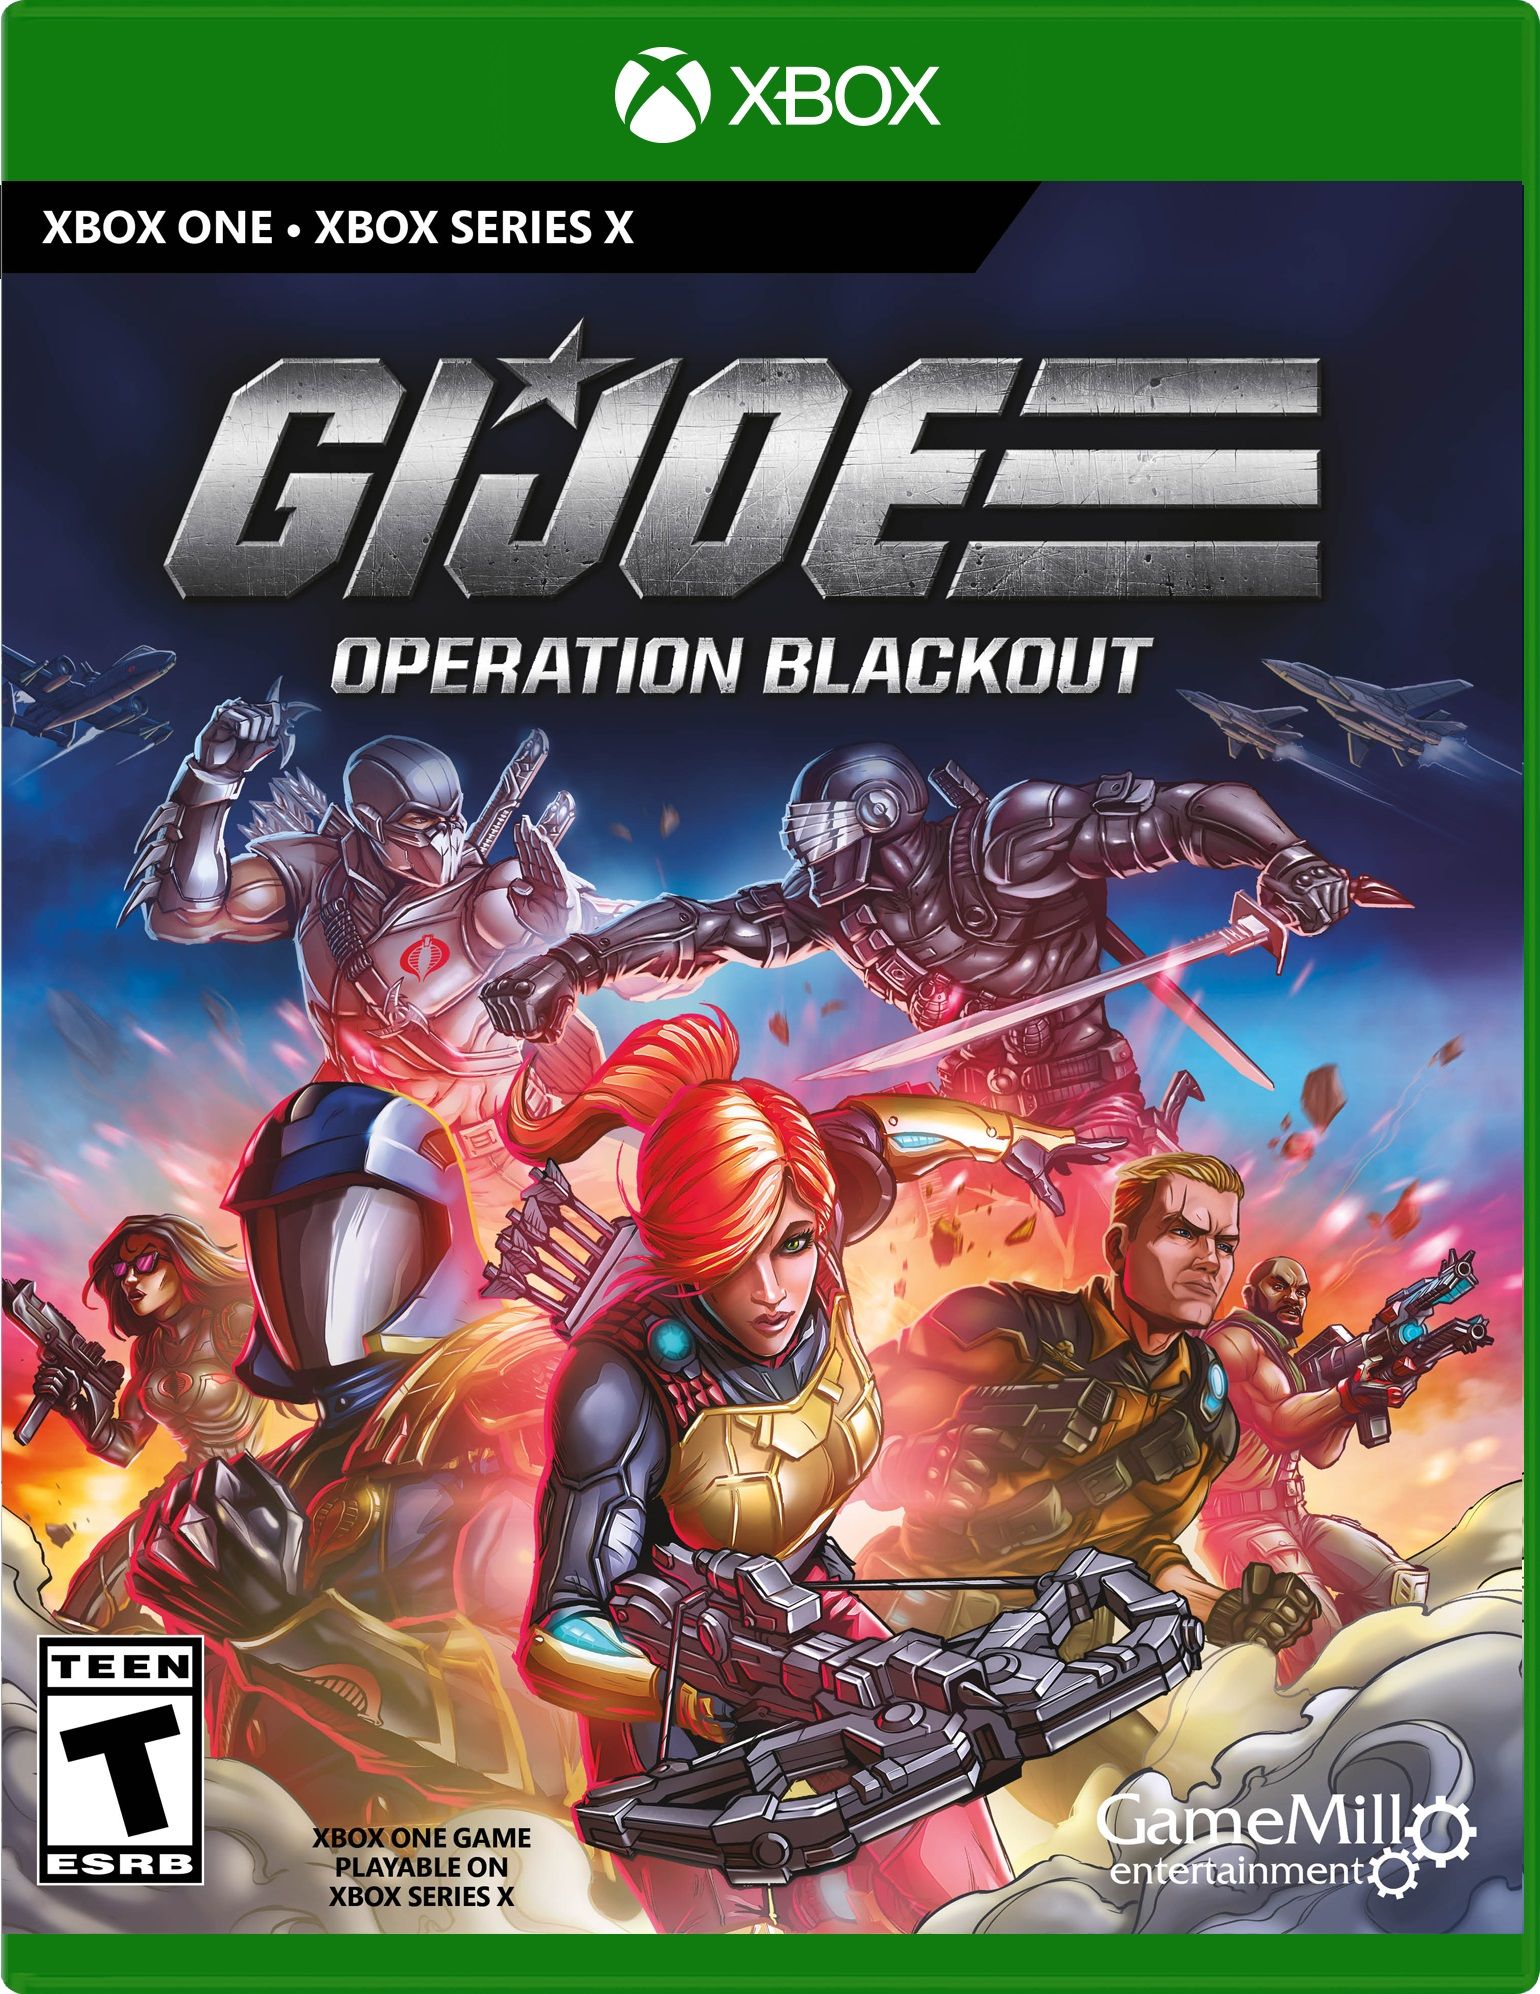 Gi Joe Operation Blackout, GameMill, Xbox One, 856131008183